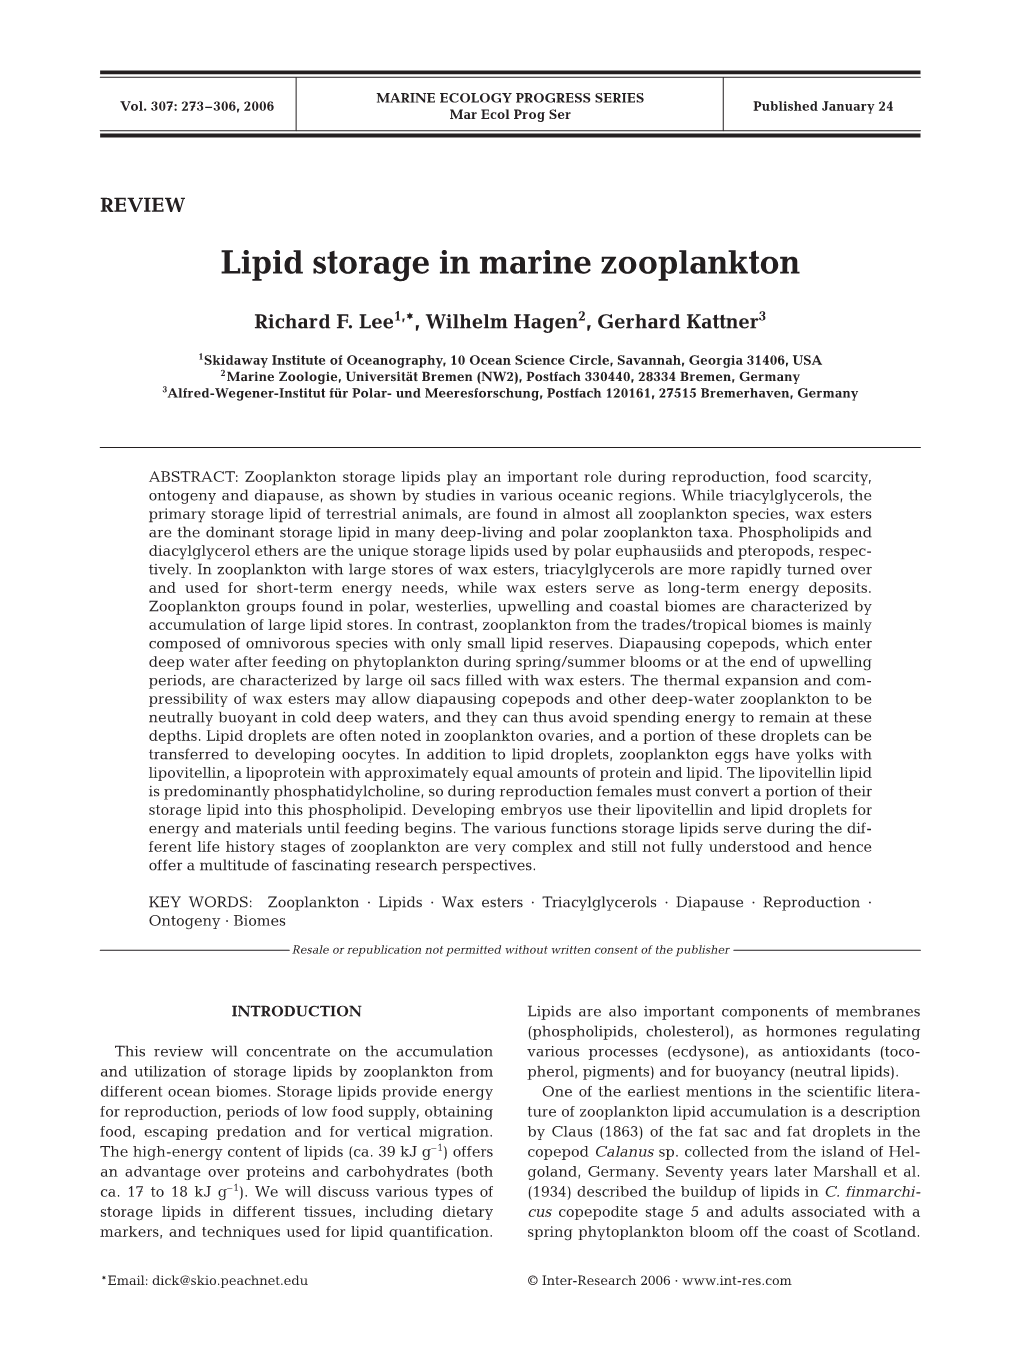 Lipid Storage in Marine Zooplankton